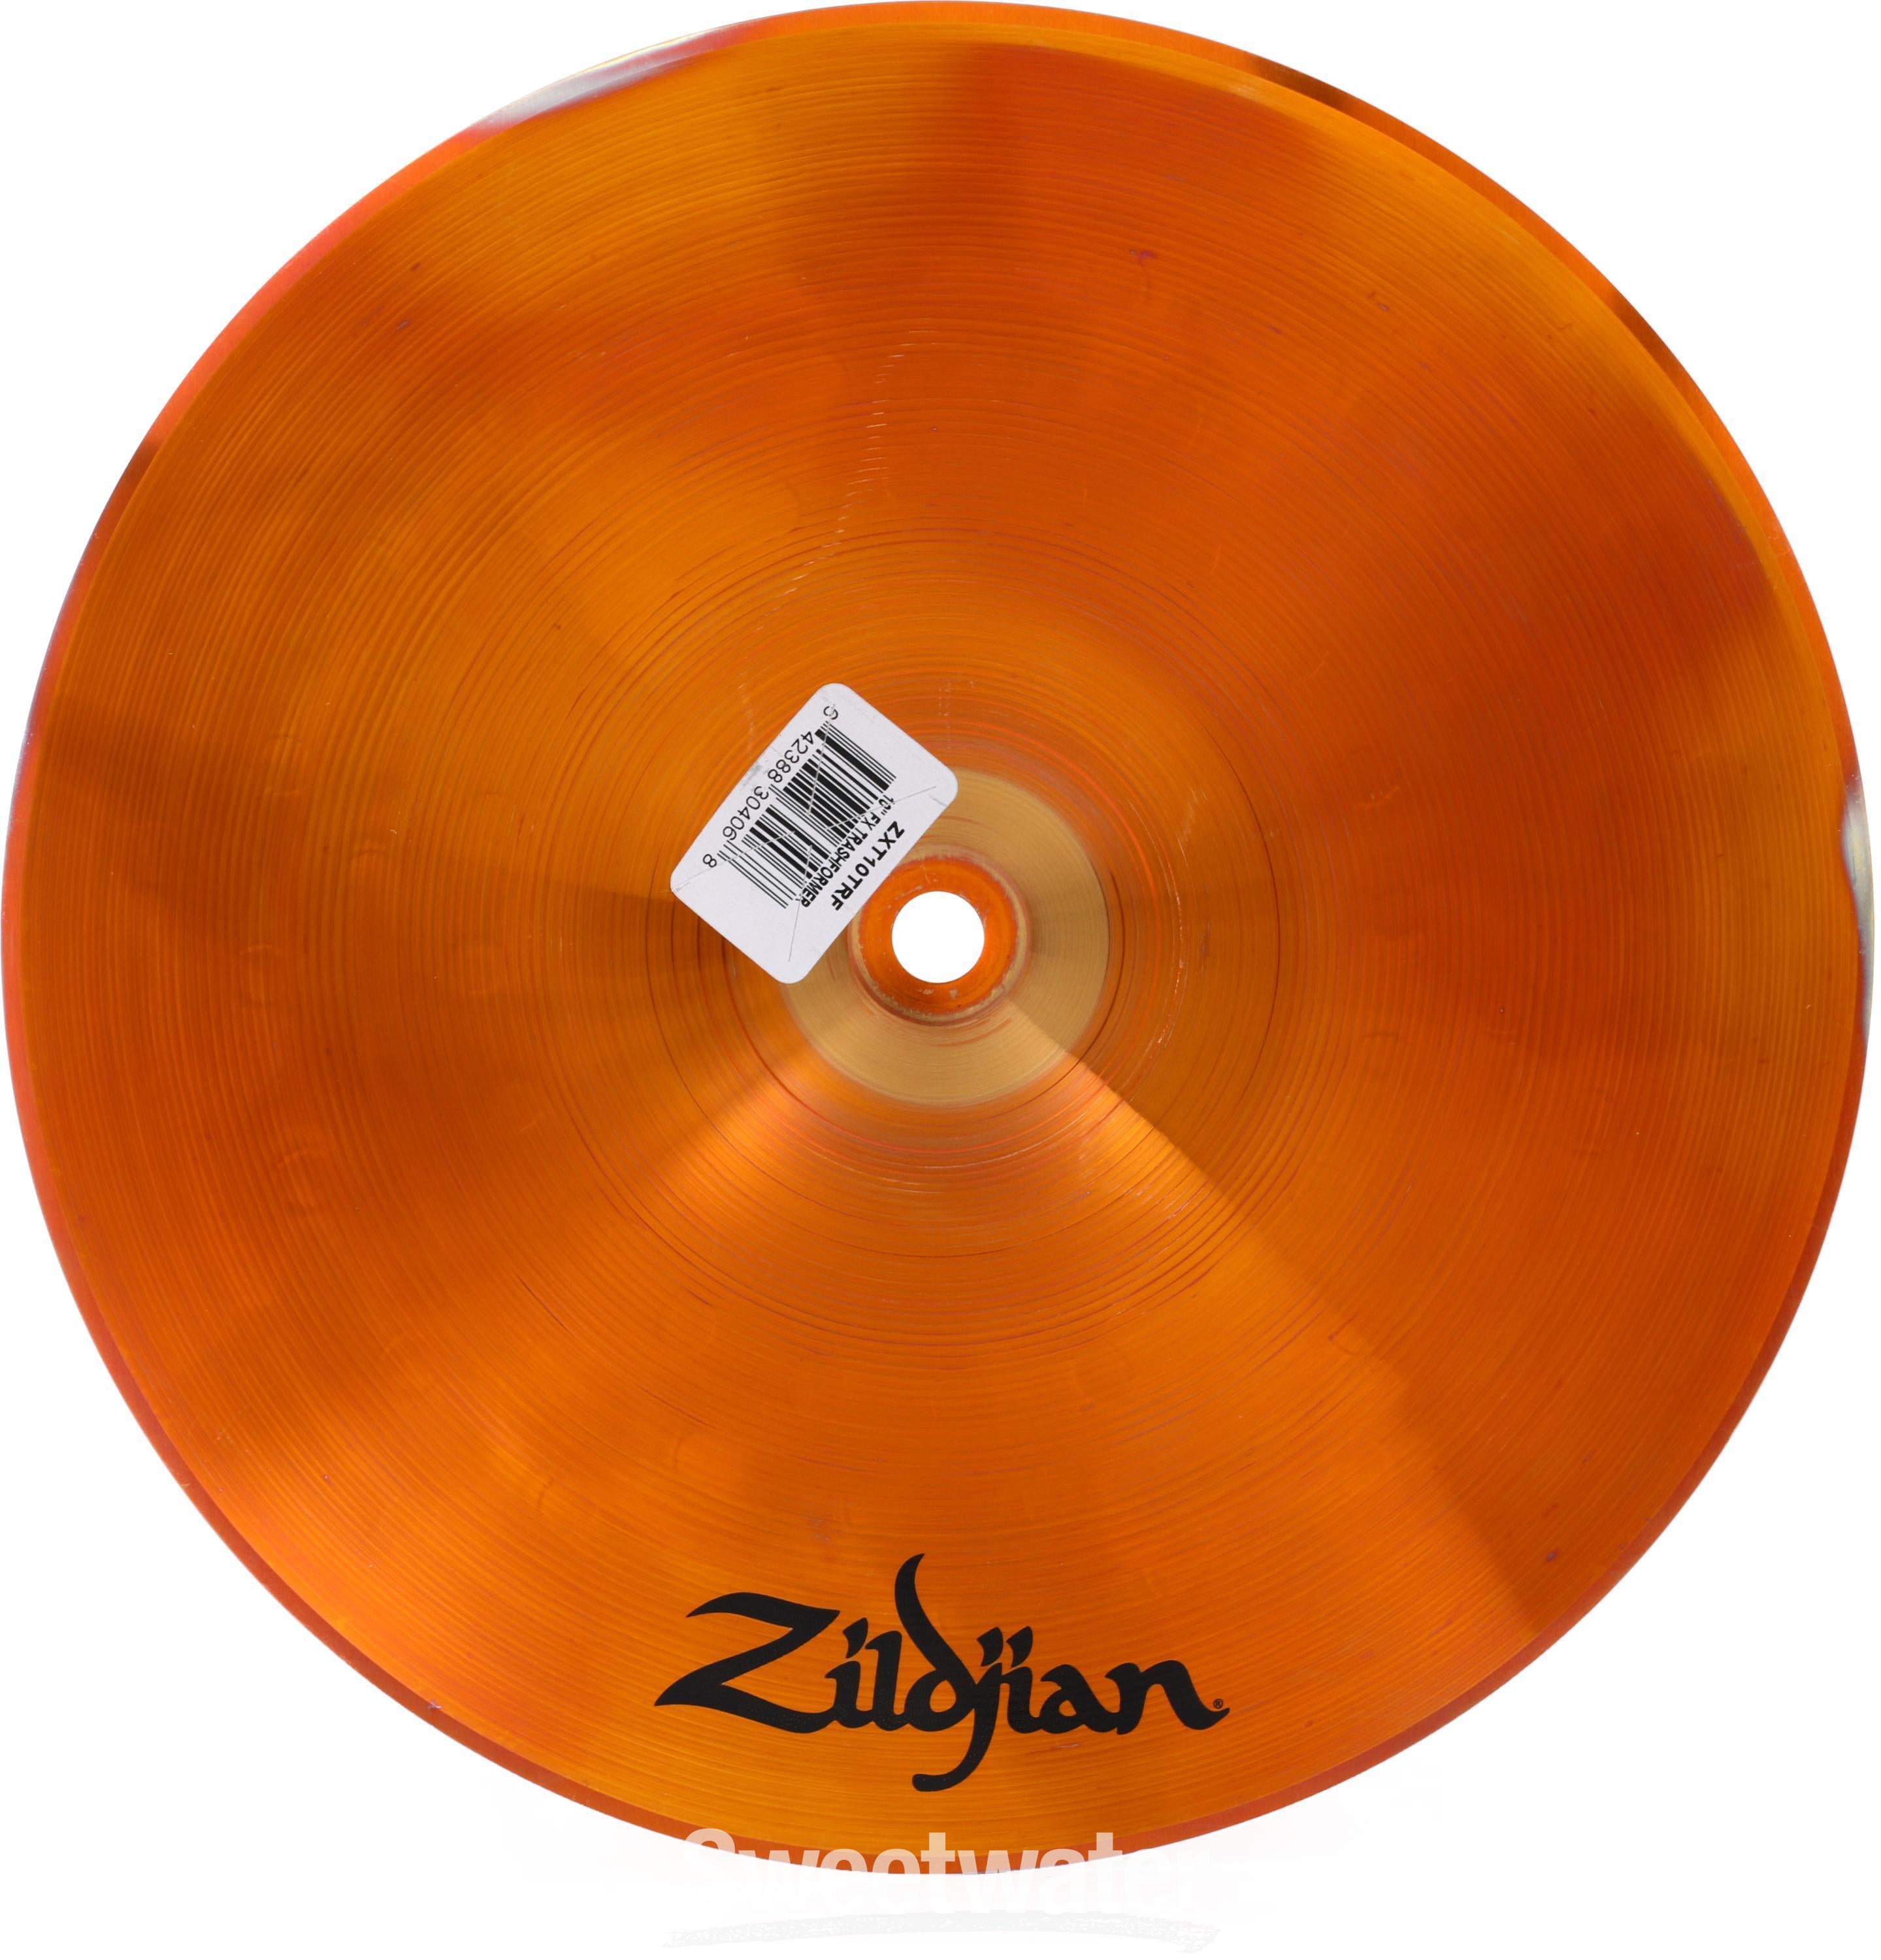 Zildjian 10 inch FX Trashformer Cymbal